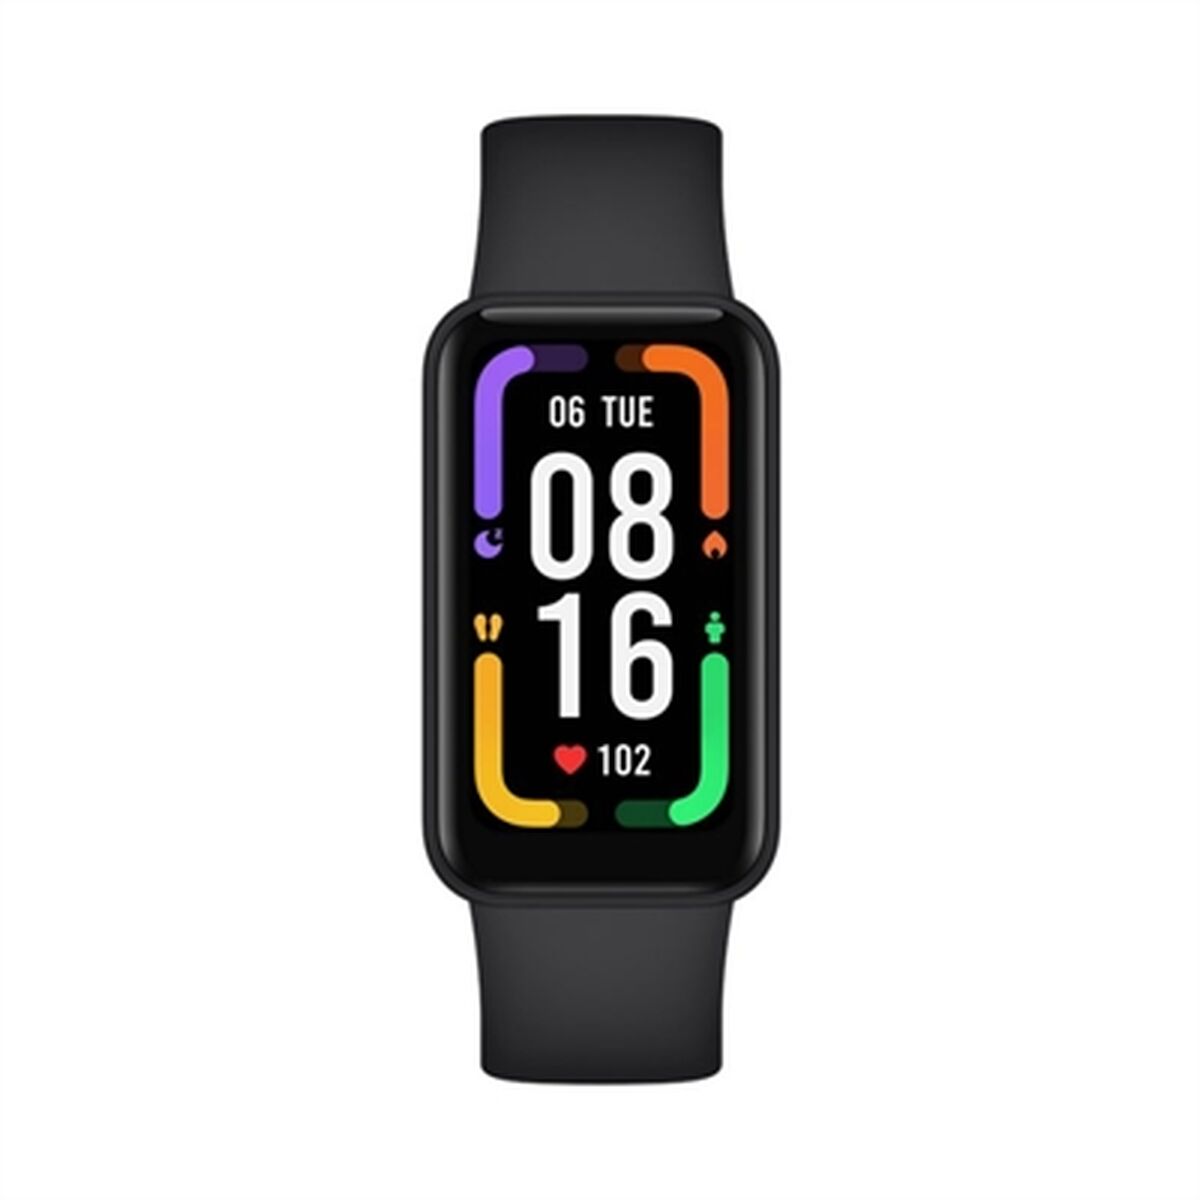 Correa para Xiaomi Redmi Watch 3 - Material TPU - Naranja